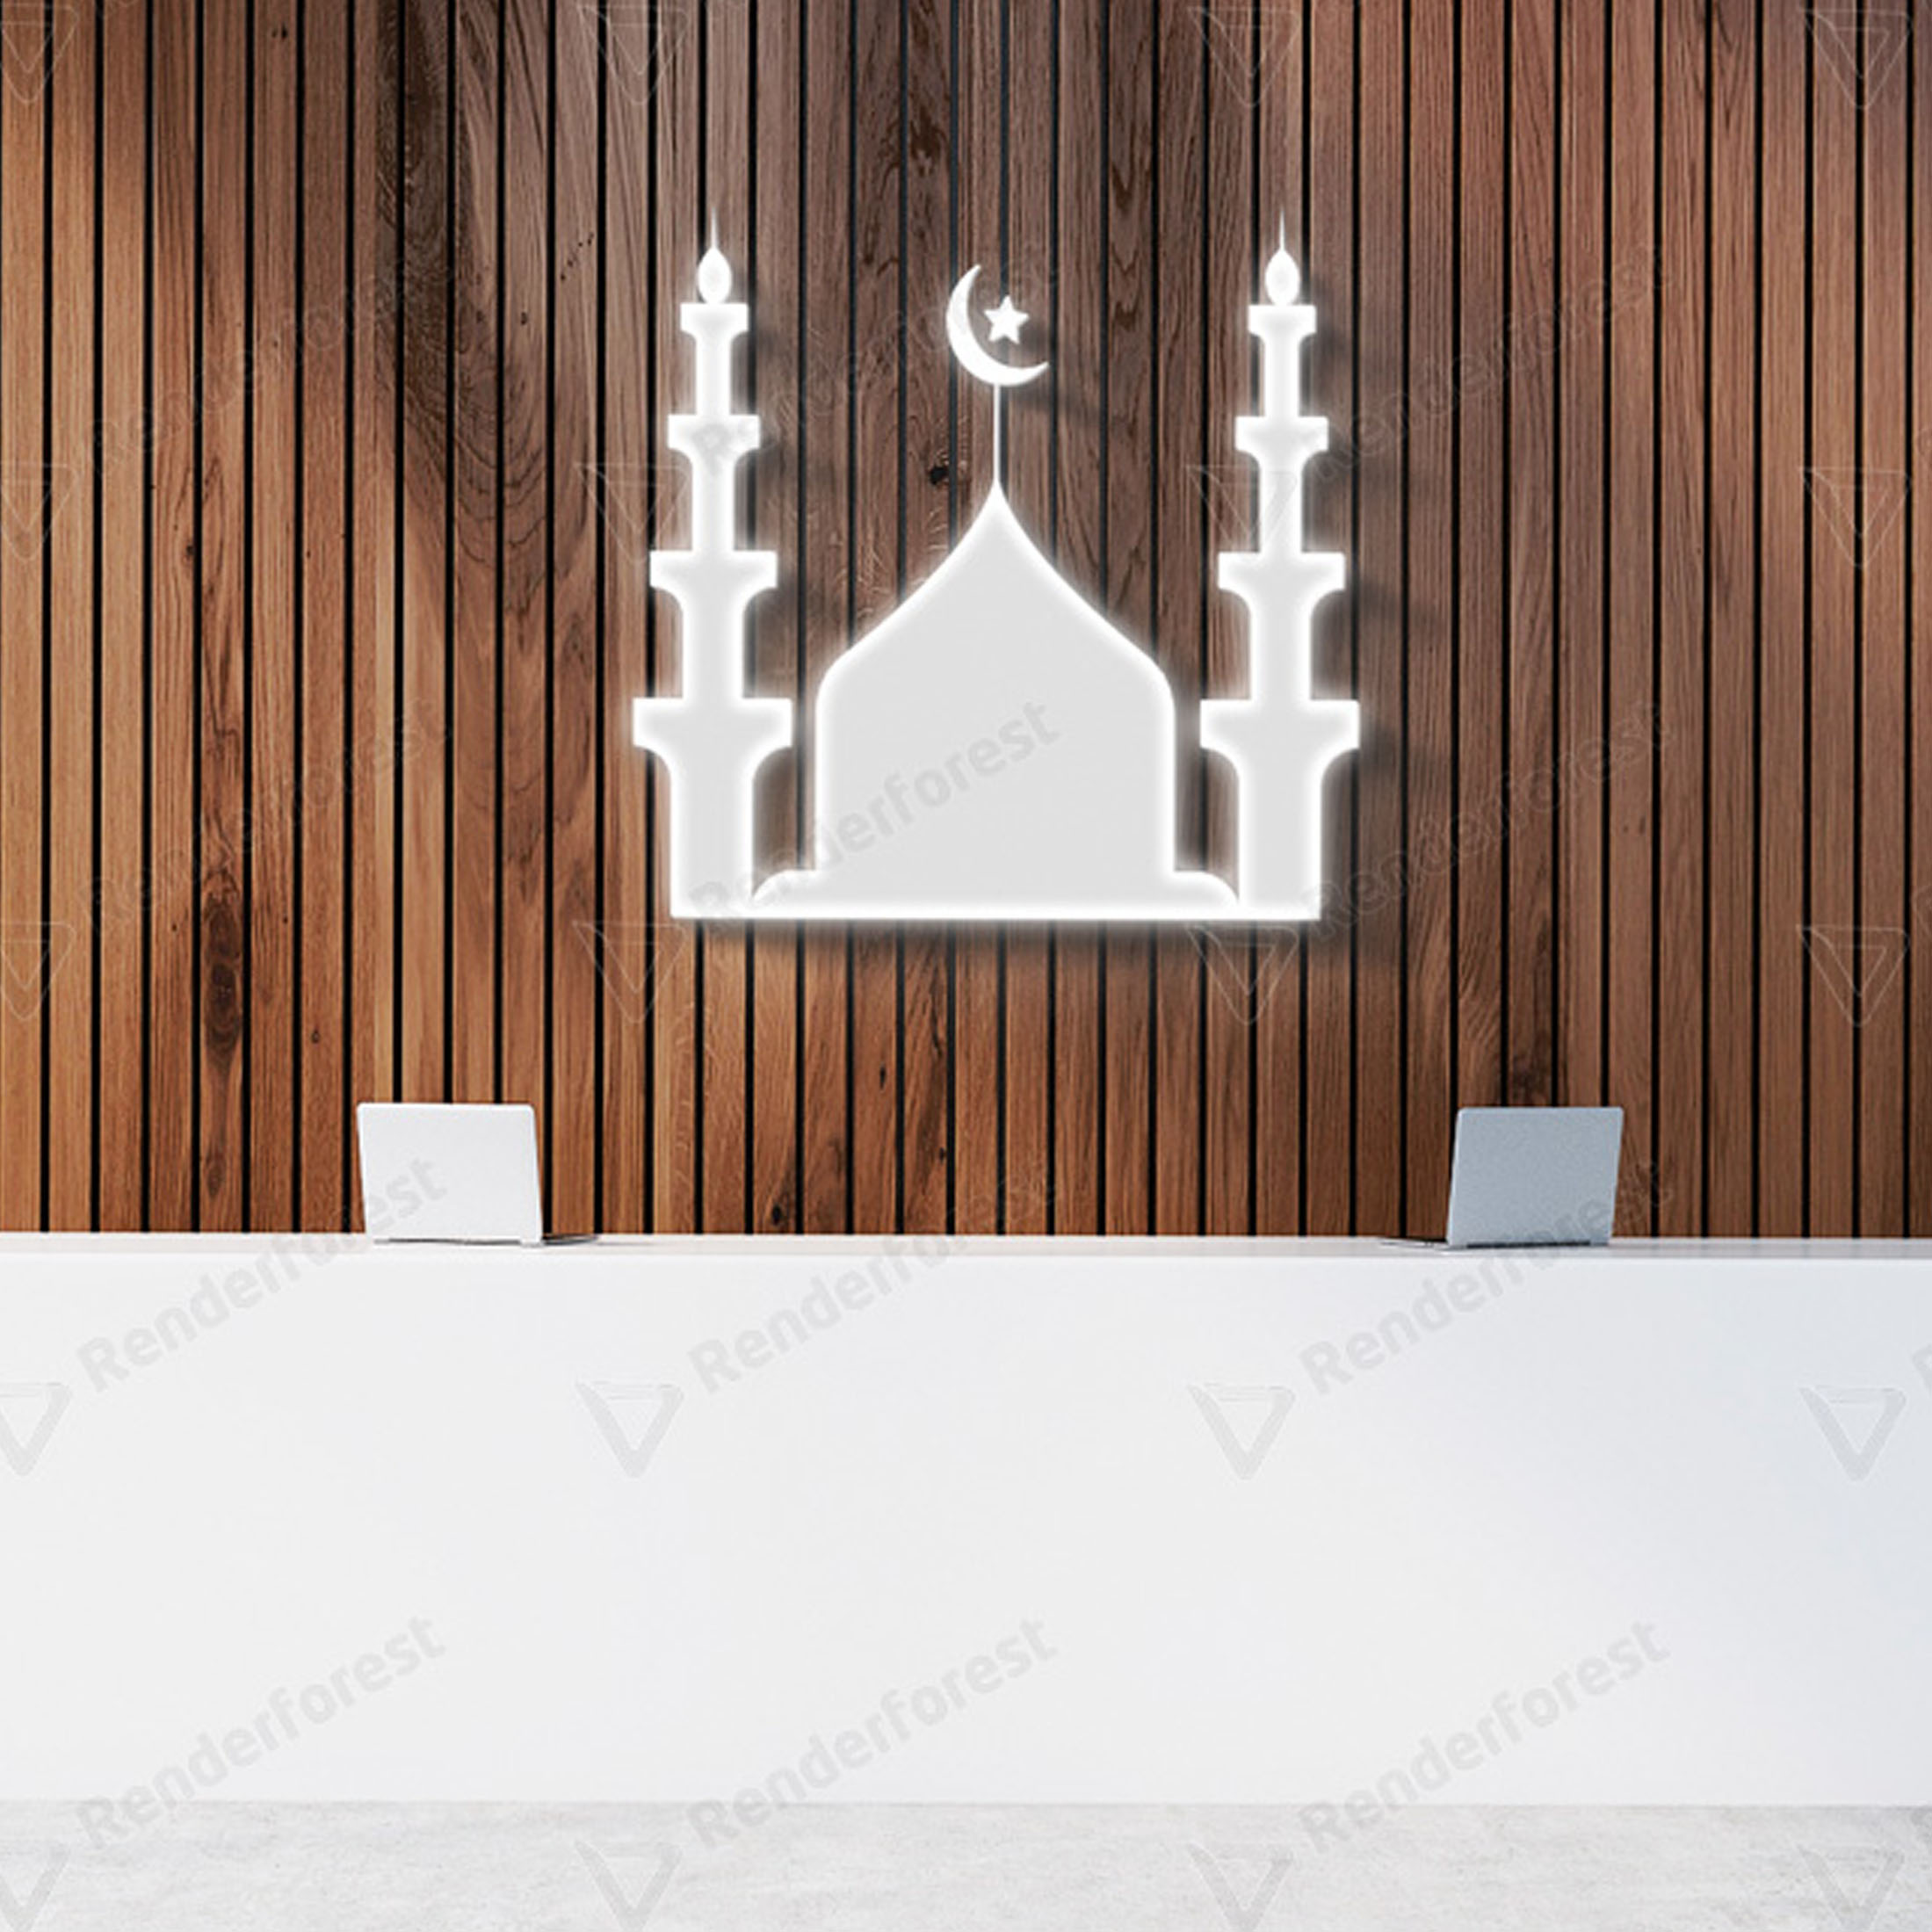 islamik logo preview image.